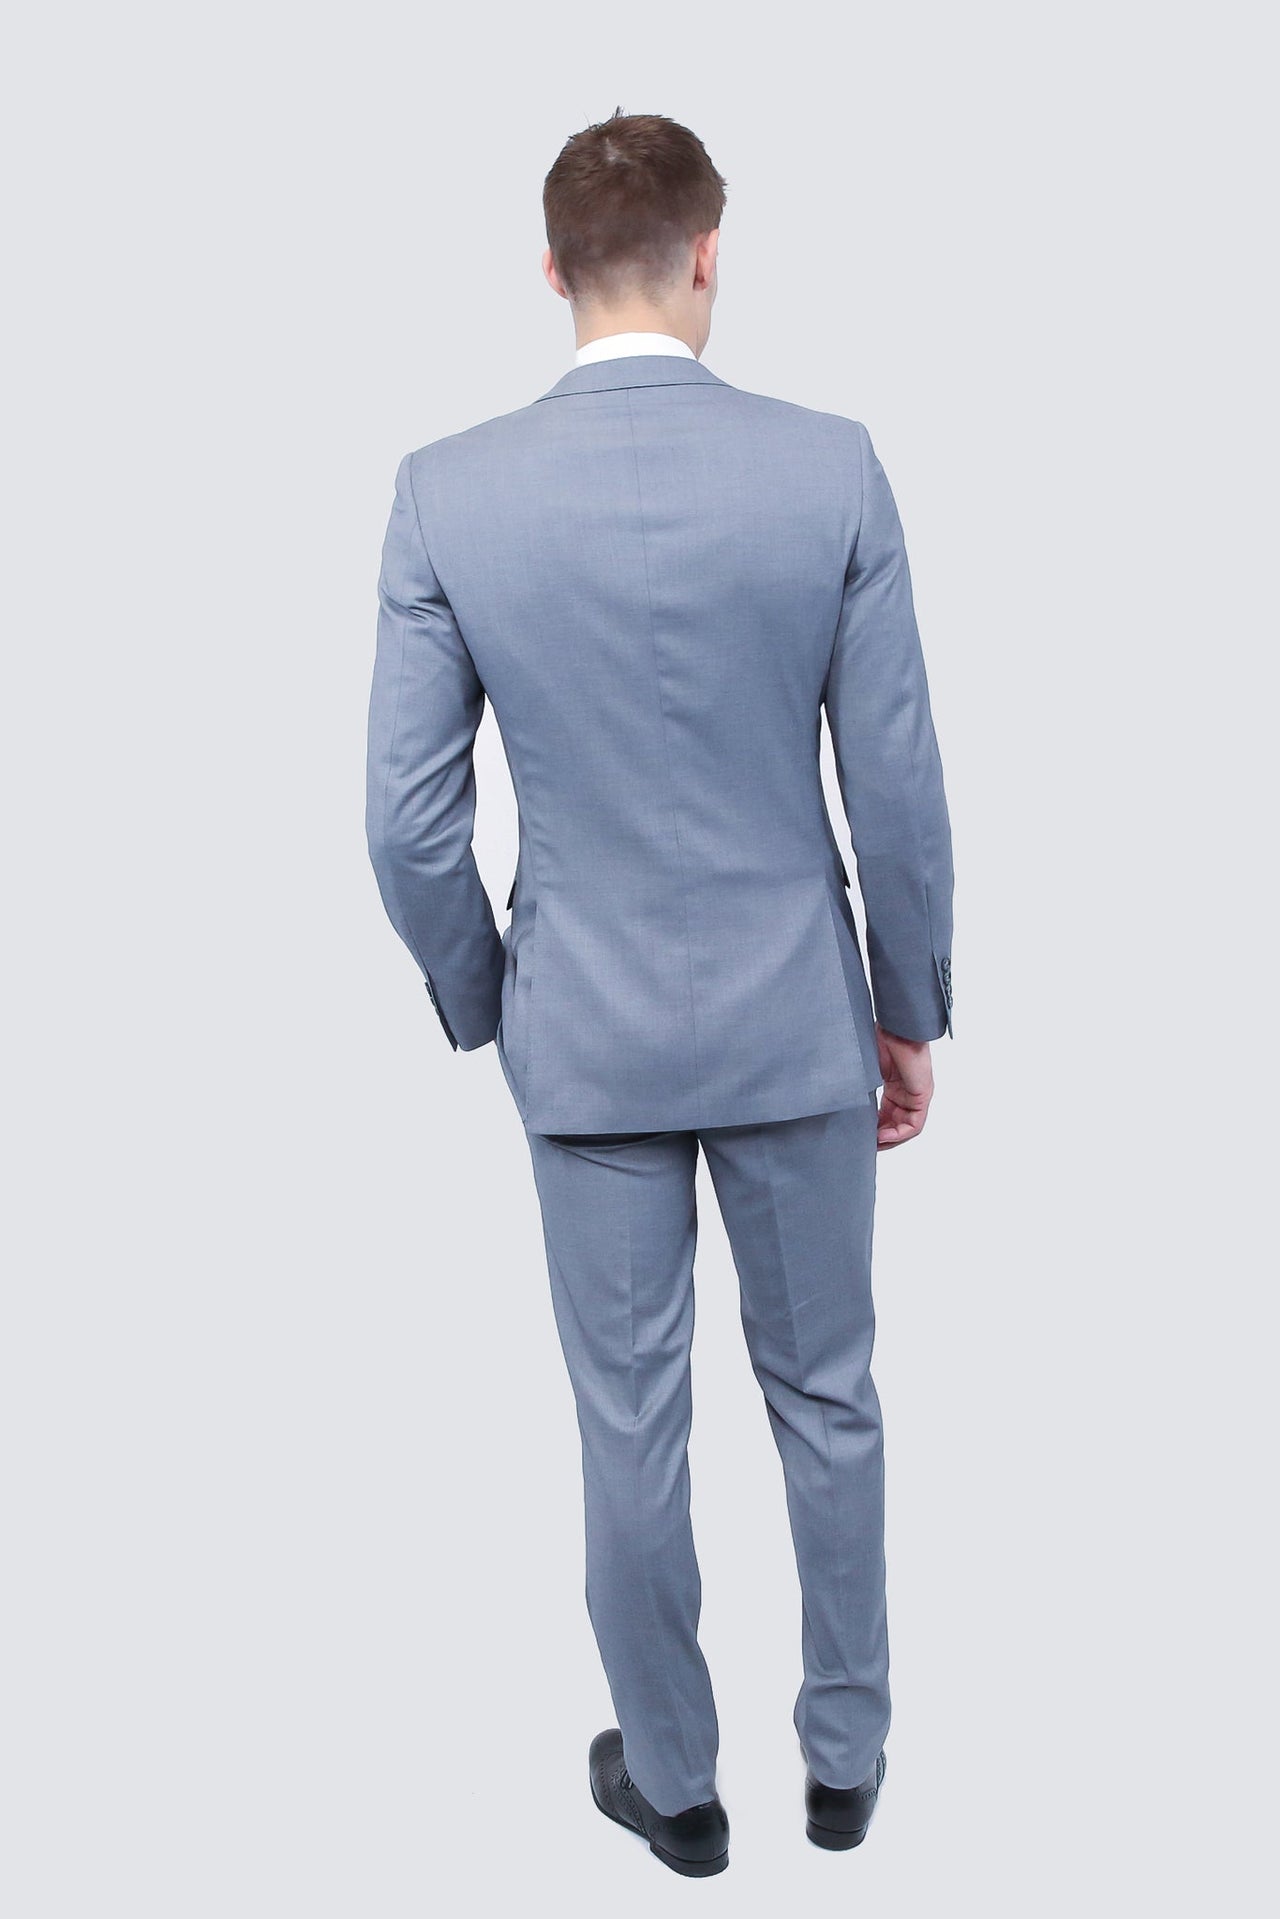 Tailor's Stretch Blend Suit, Shark Grey